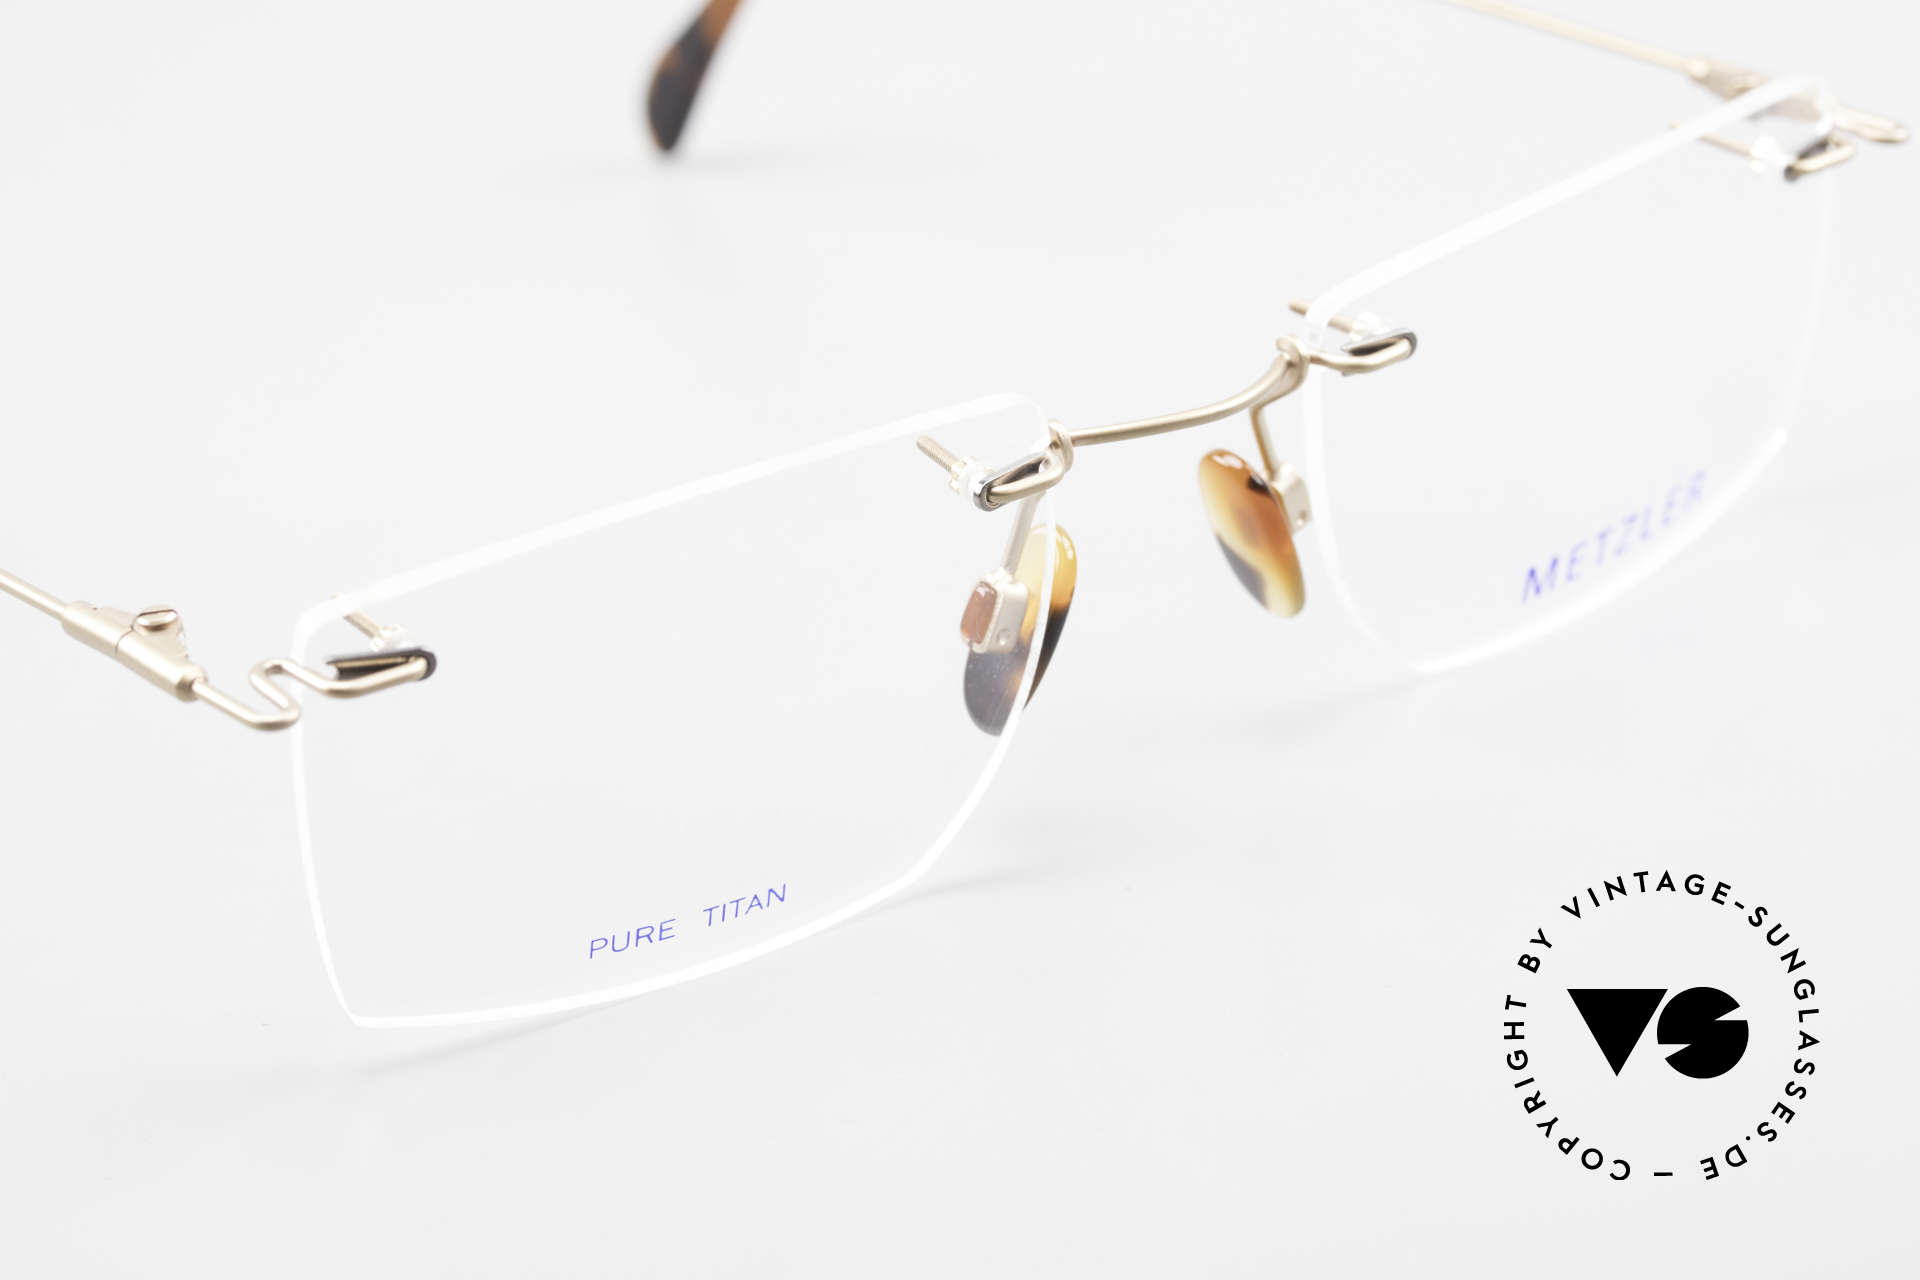 Metzler 1484 Rimless Vintage Glasses Titan, NO RETRO specs, but genuine old VINTAGE commodity, Made for Men